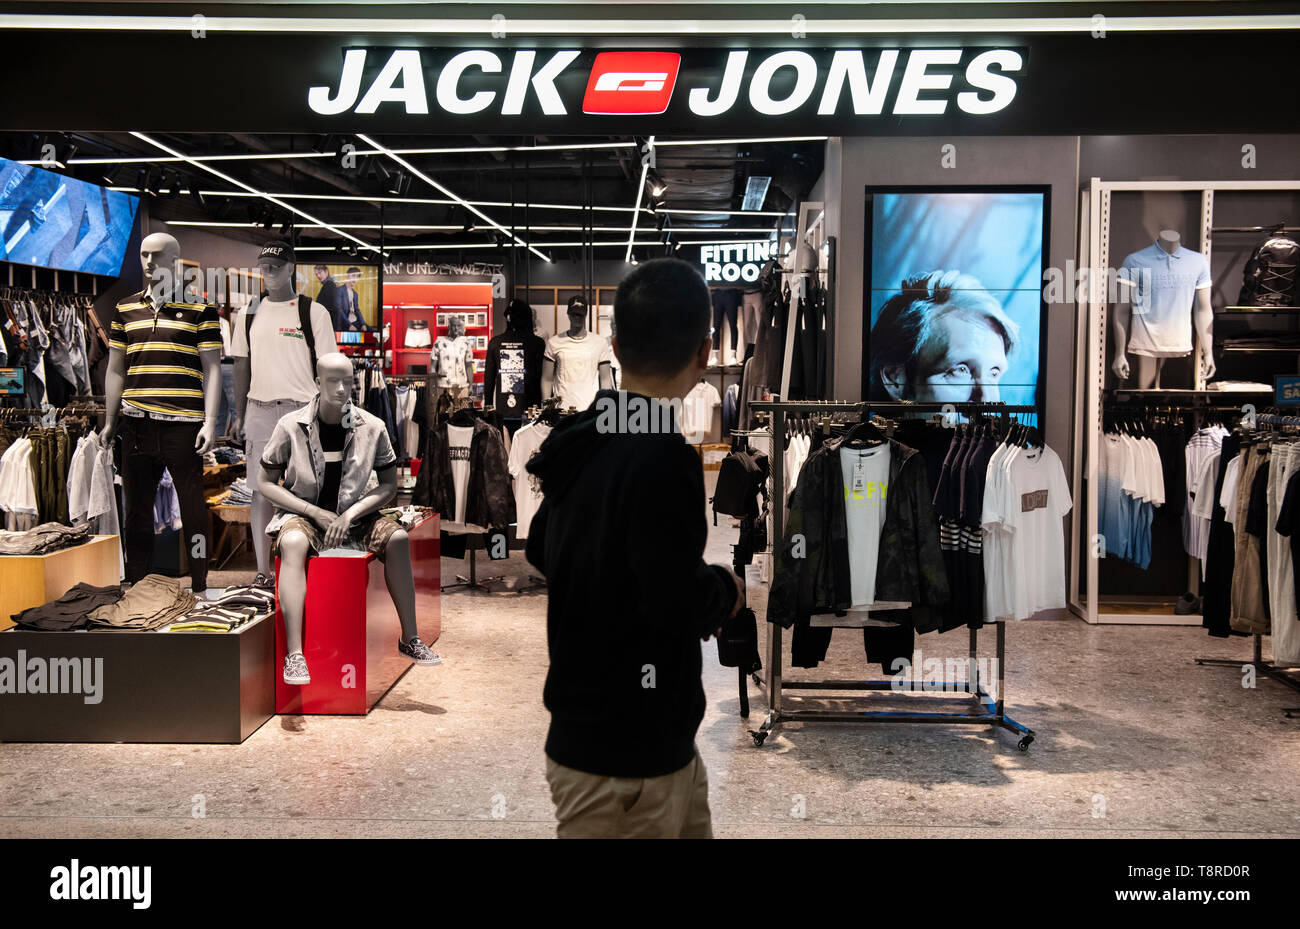 خط العرض مقتصد اتحادي jack and jones uk stores - dsvdedommel.com